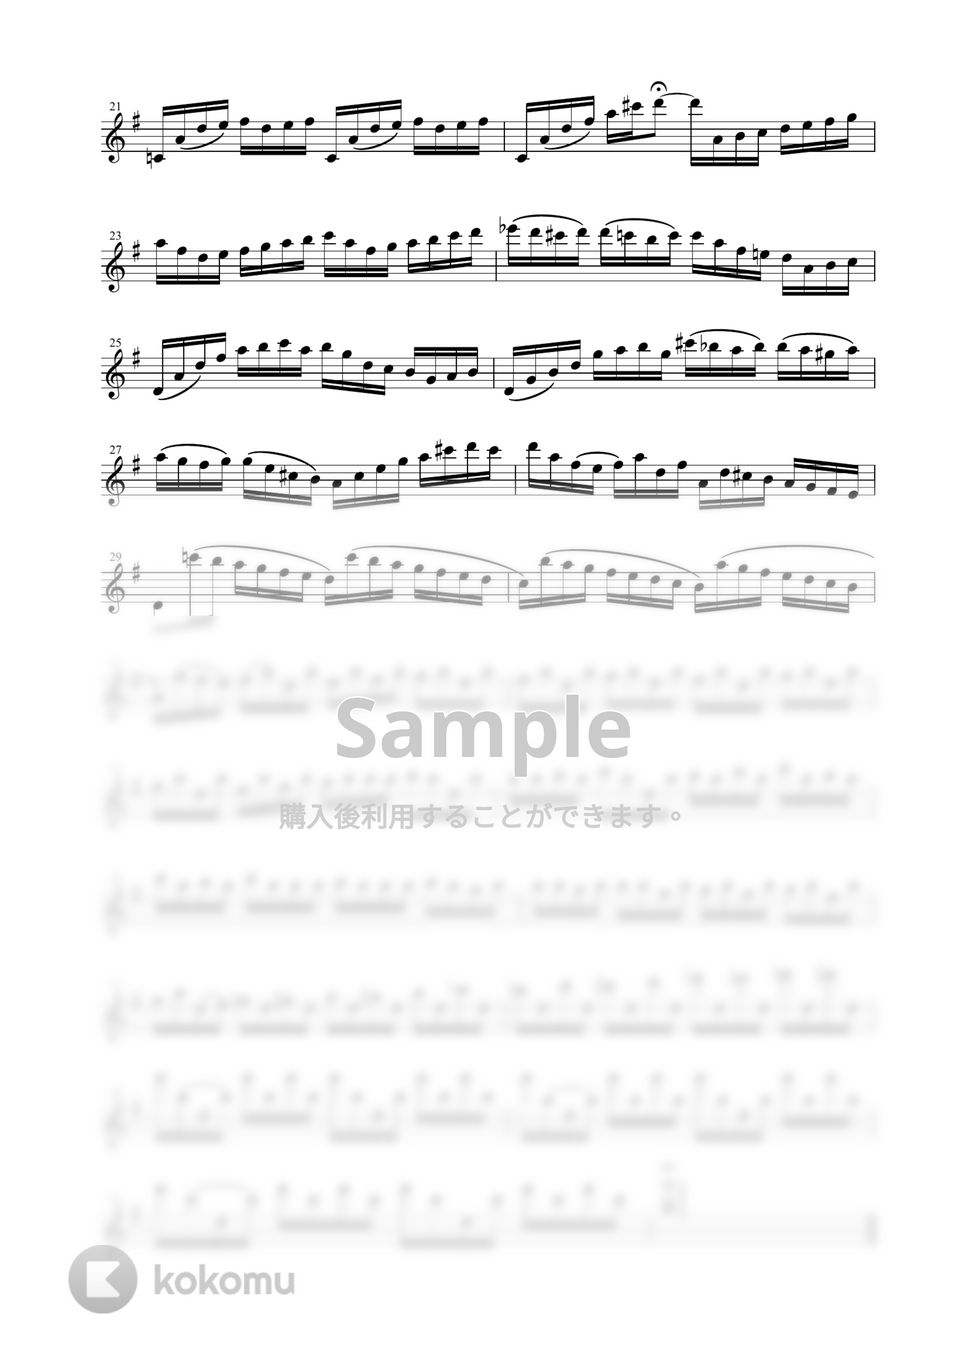 J.S.バッハ - チェロ組曲 より 第１番 プレリュード BWV1007 (フルート独奏 / 無伴奏) by Zoe